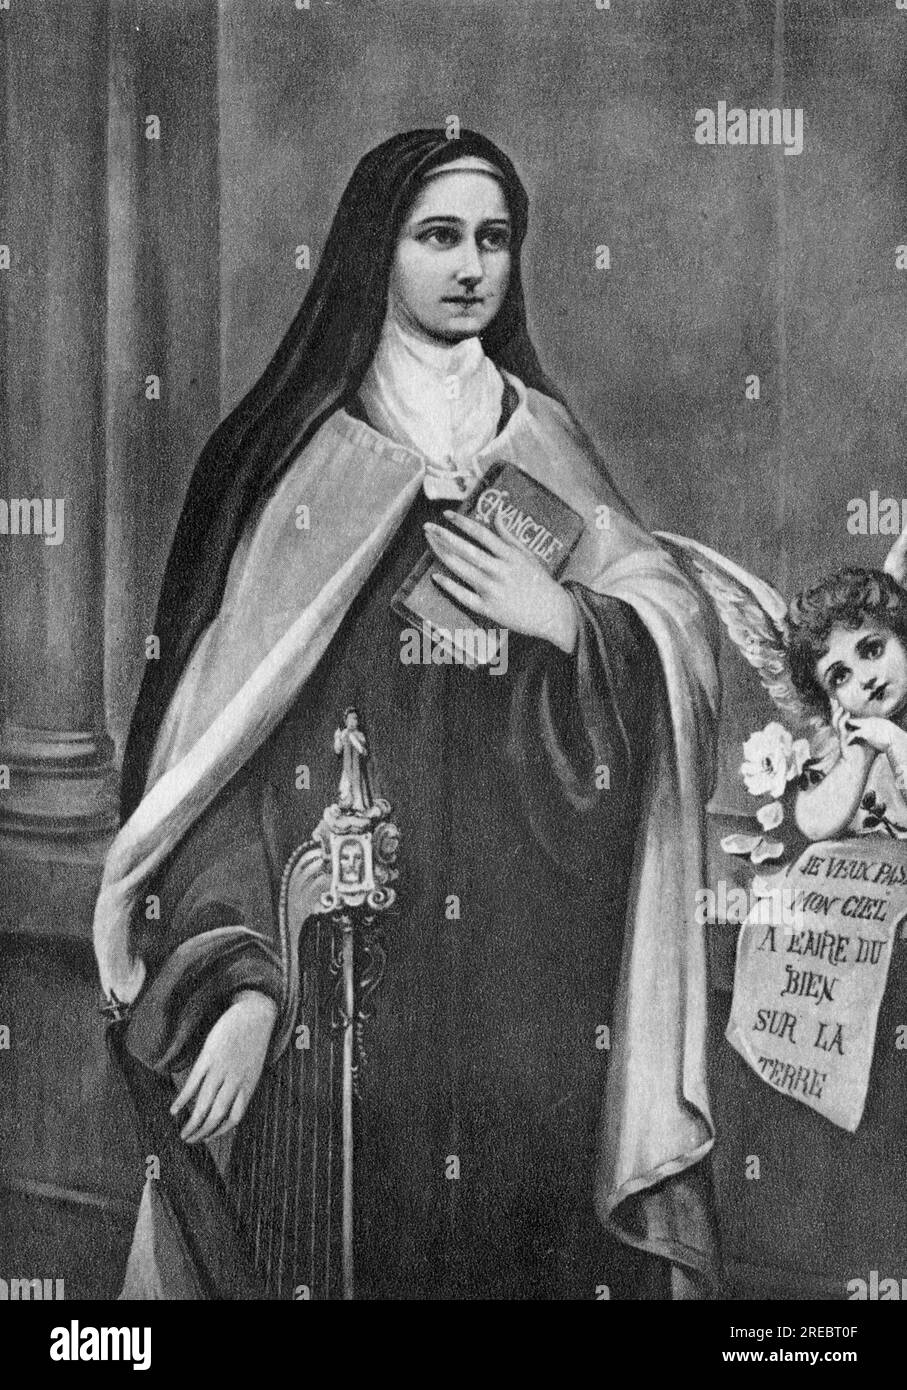 Teresa de Lisieux, 2.1.1873 - 30,9.1897, monja francesa, santa, basada en la pintura de su hermana Celine, ADDITIONAL-RIGHTS-CLEARANCE-INFO-NOT-AVAILABLE Foto de stock